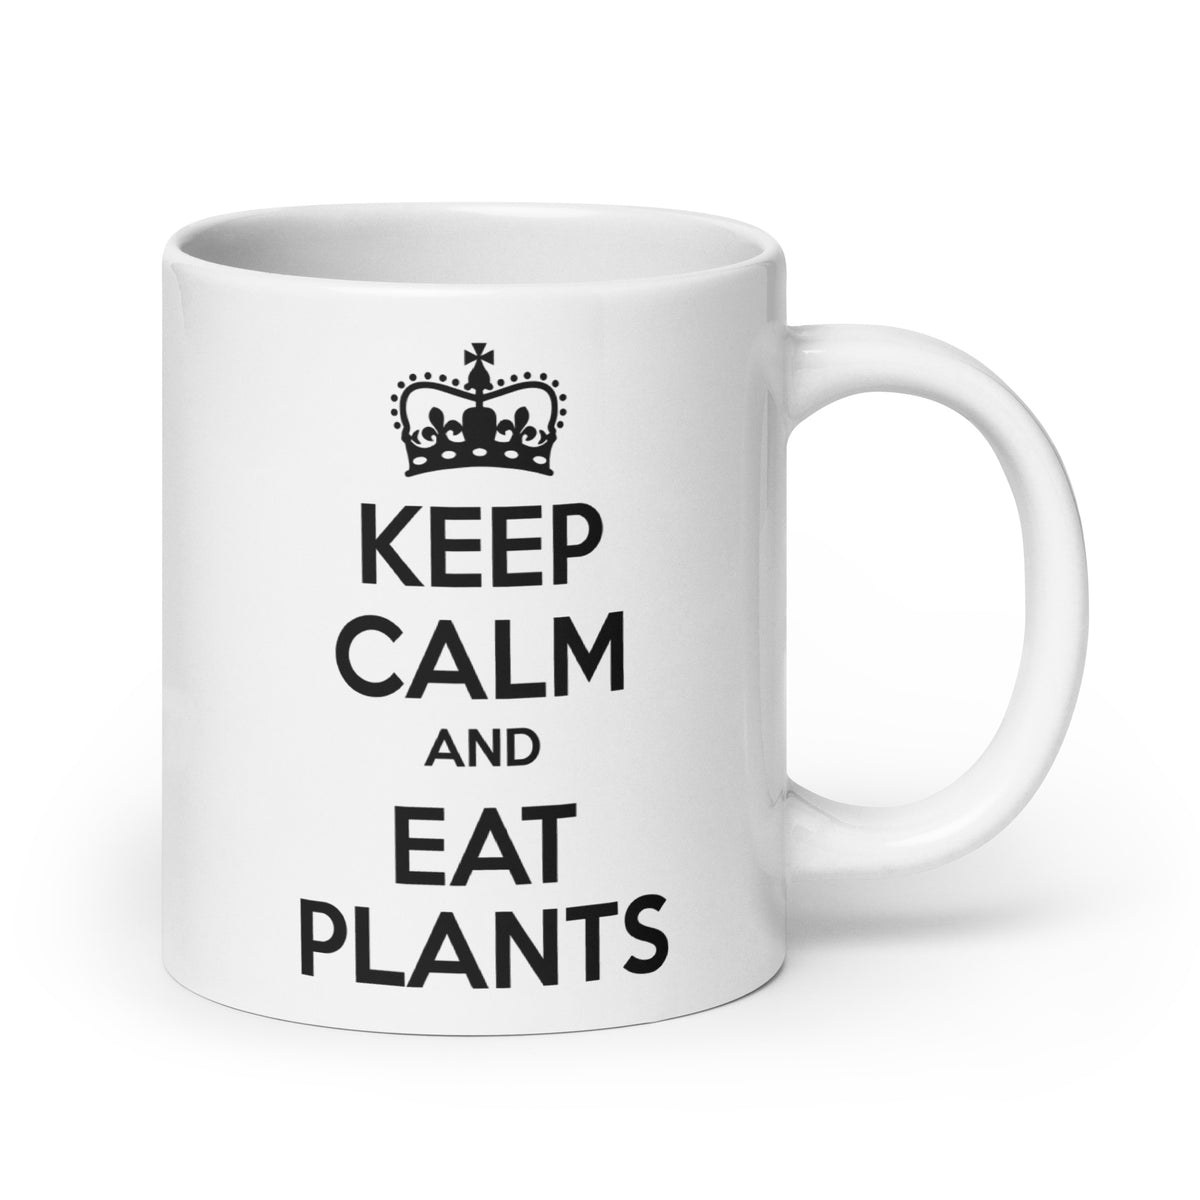 KEEP CALM EAT PLANTS White glossy mug